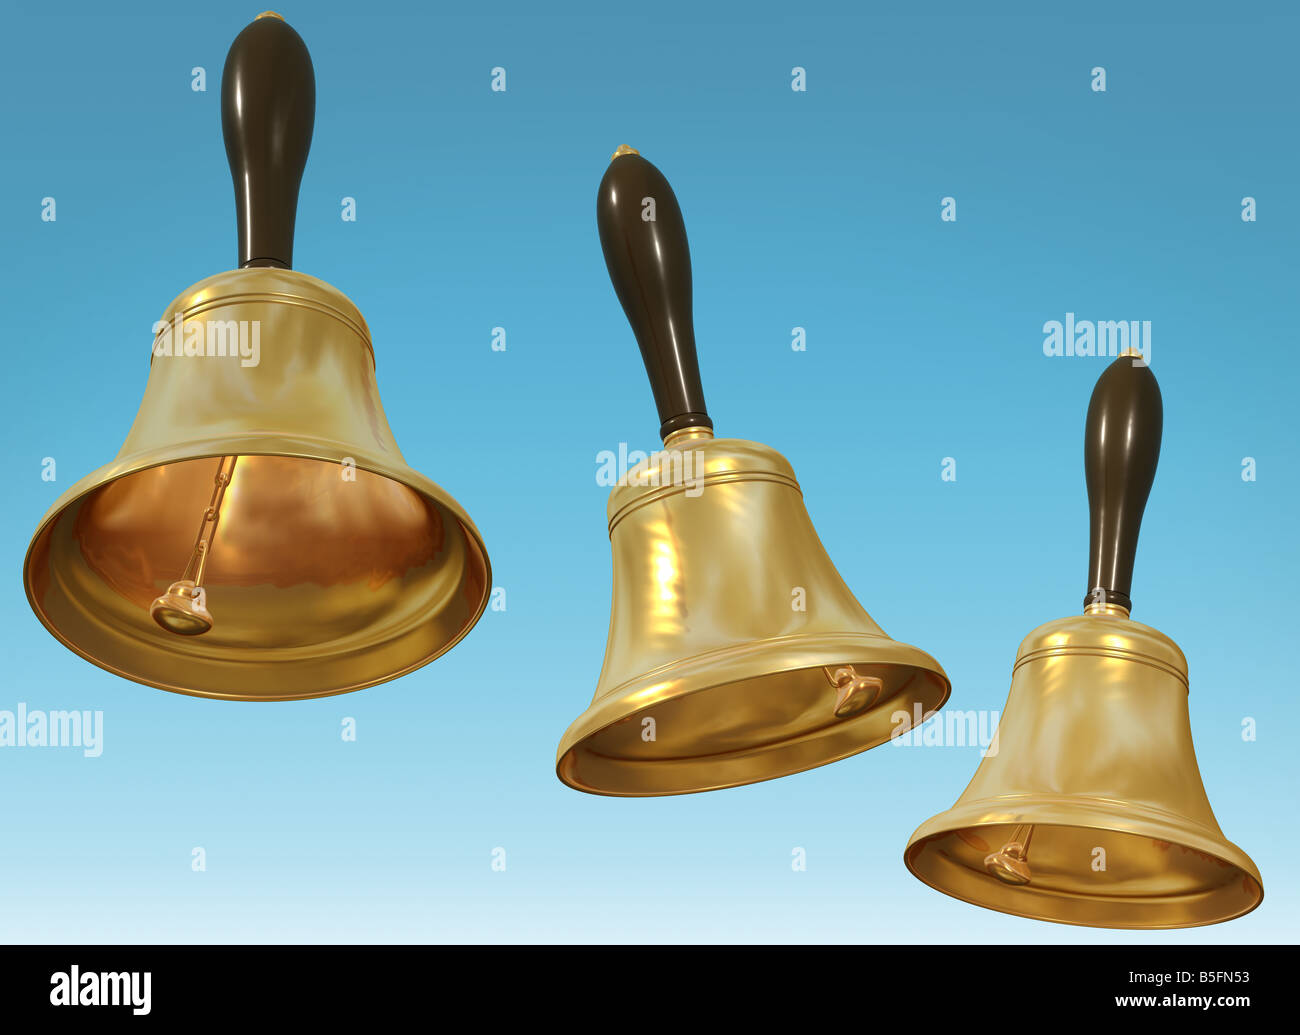 Illustration of three brass hand bells Stock Photo